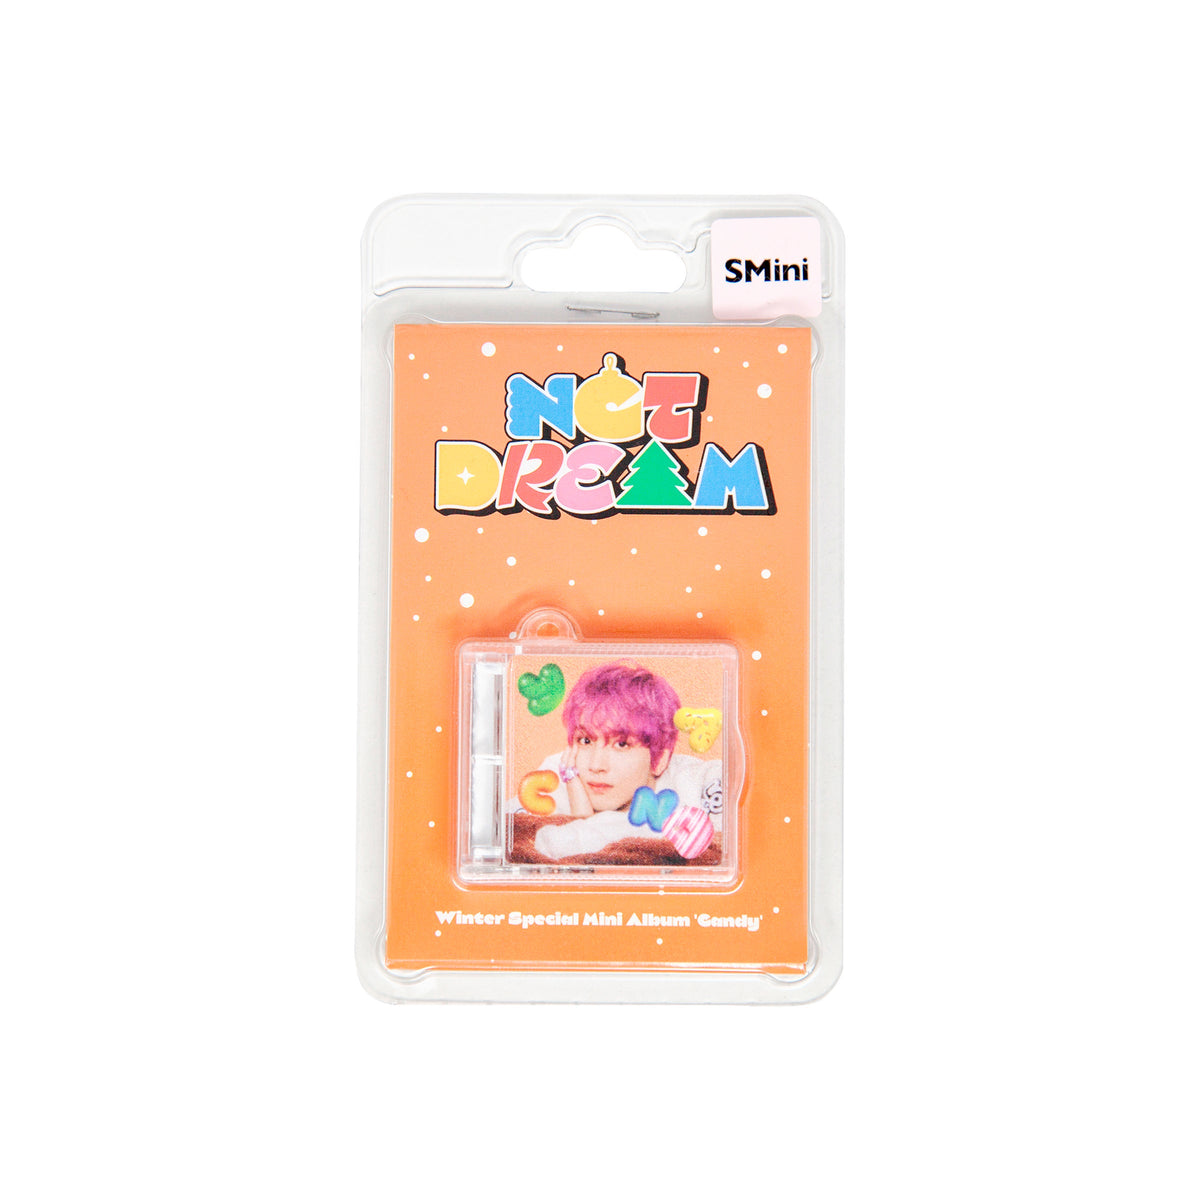 NCT DREAM Candy Winter Special Mini Album - SMini Version Haechan Ver Main Product Image